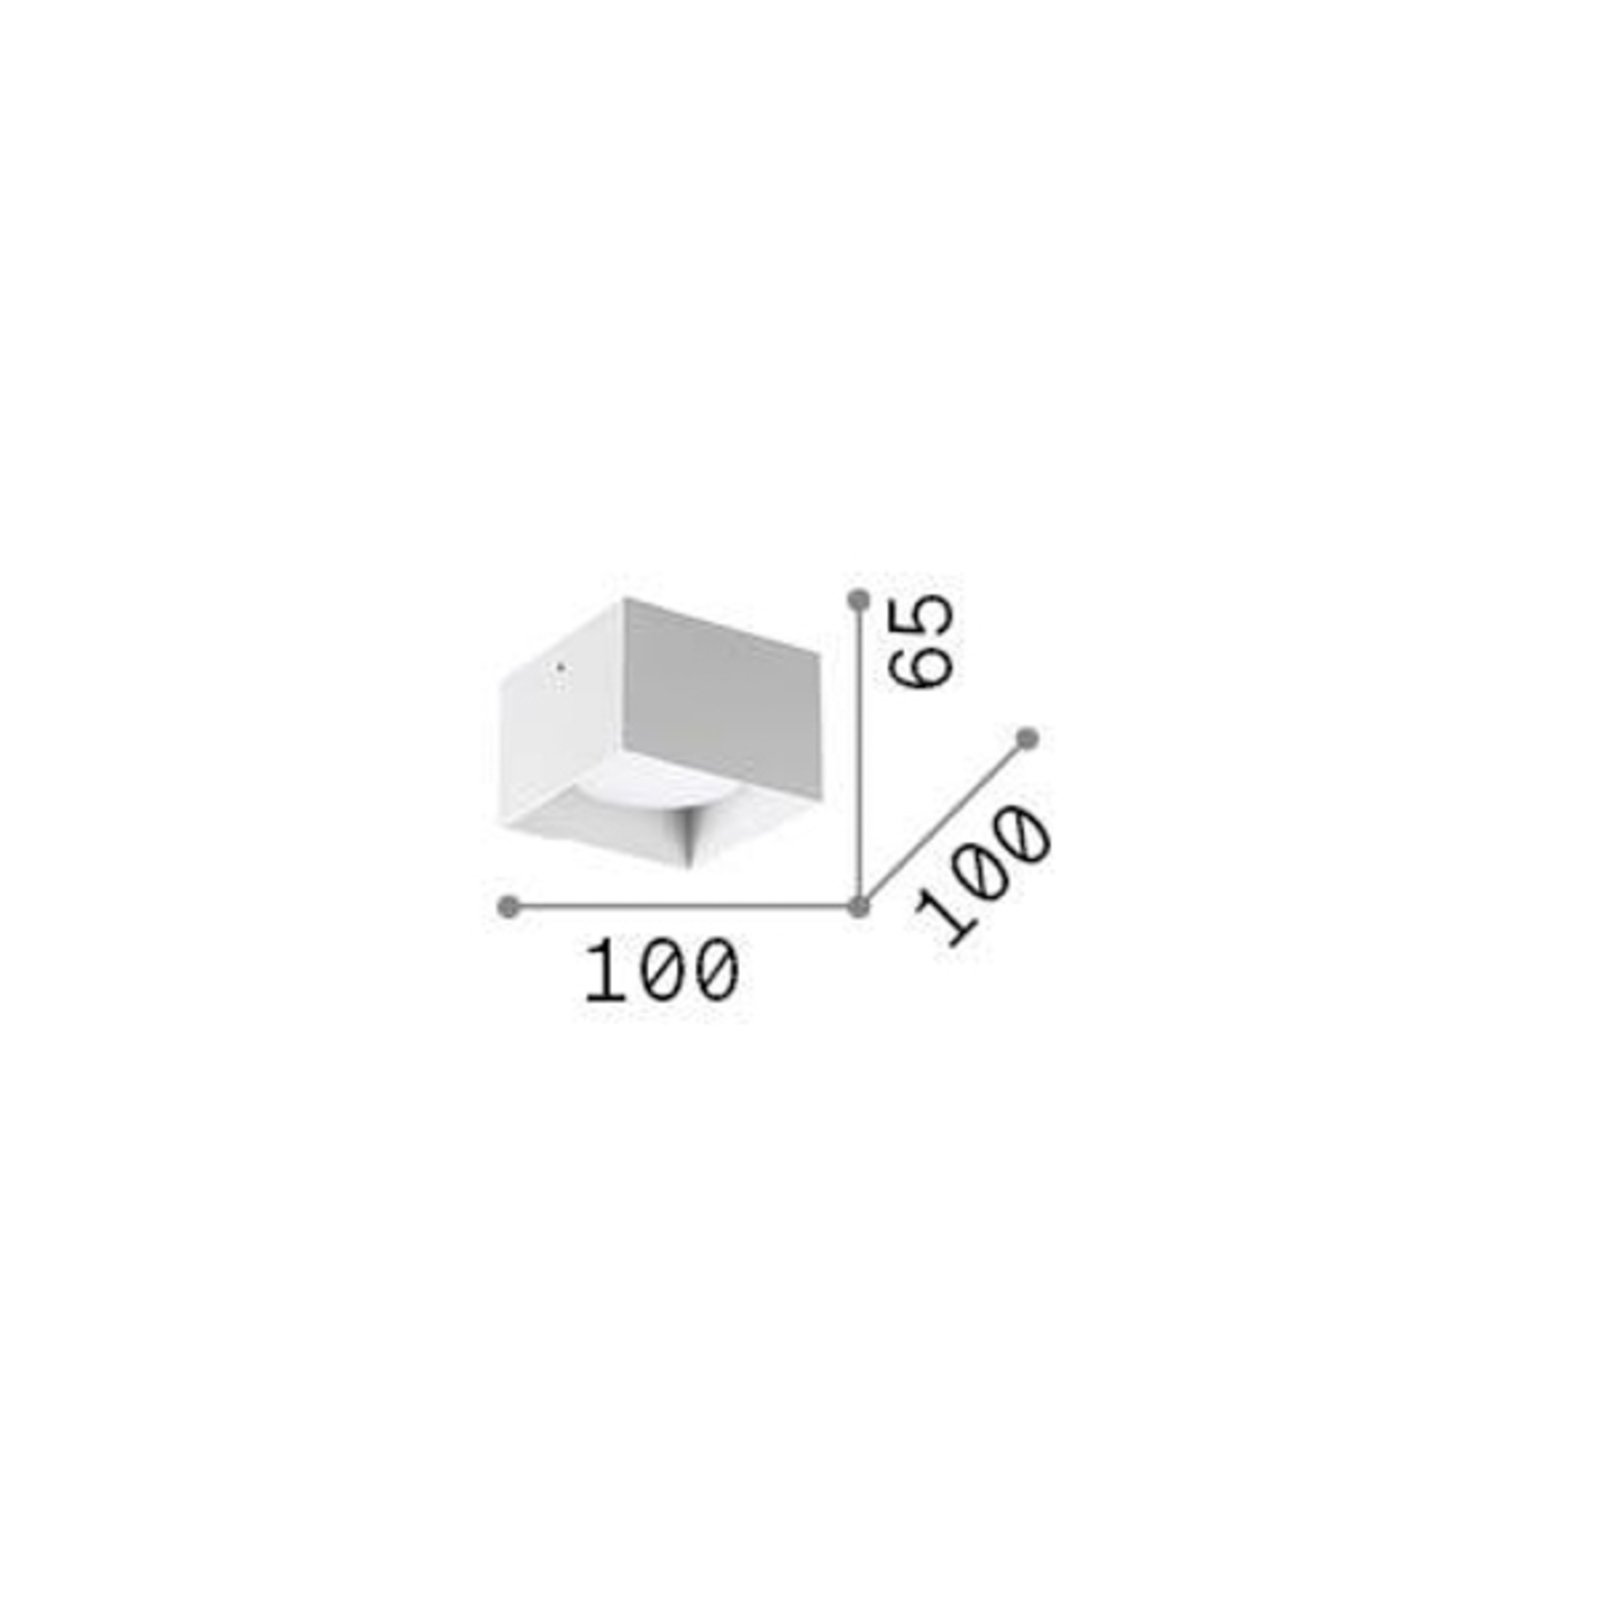 Ideal Lux downlight Spike Square, color latón, aluminio, 10 cm